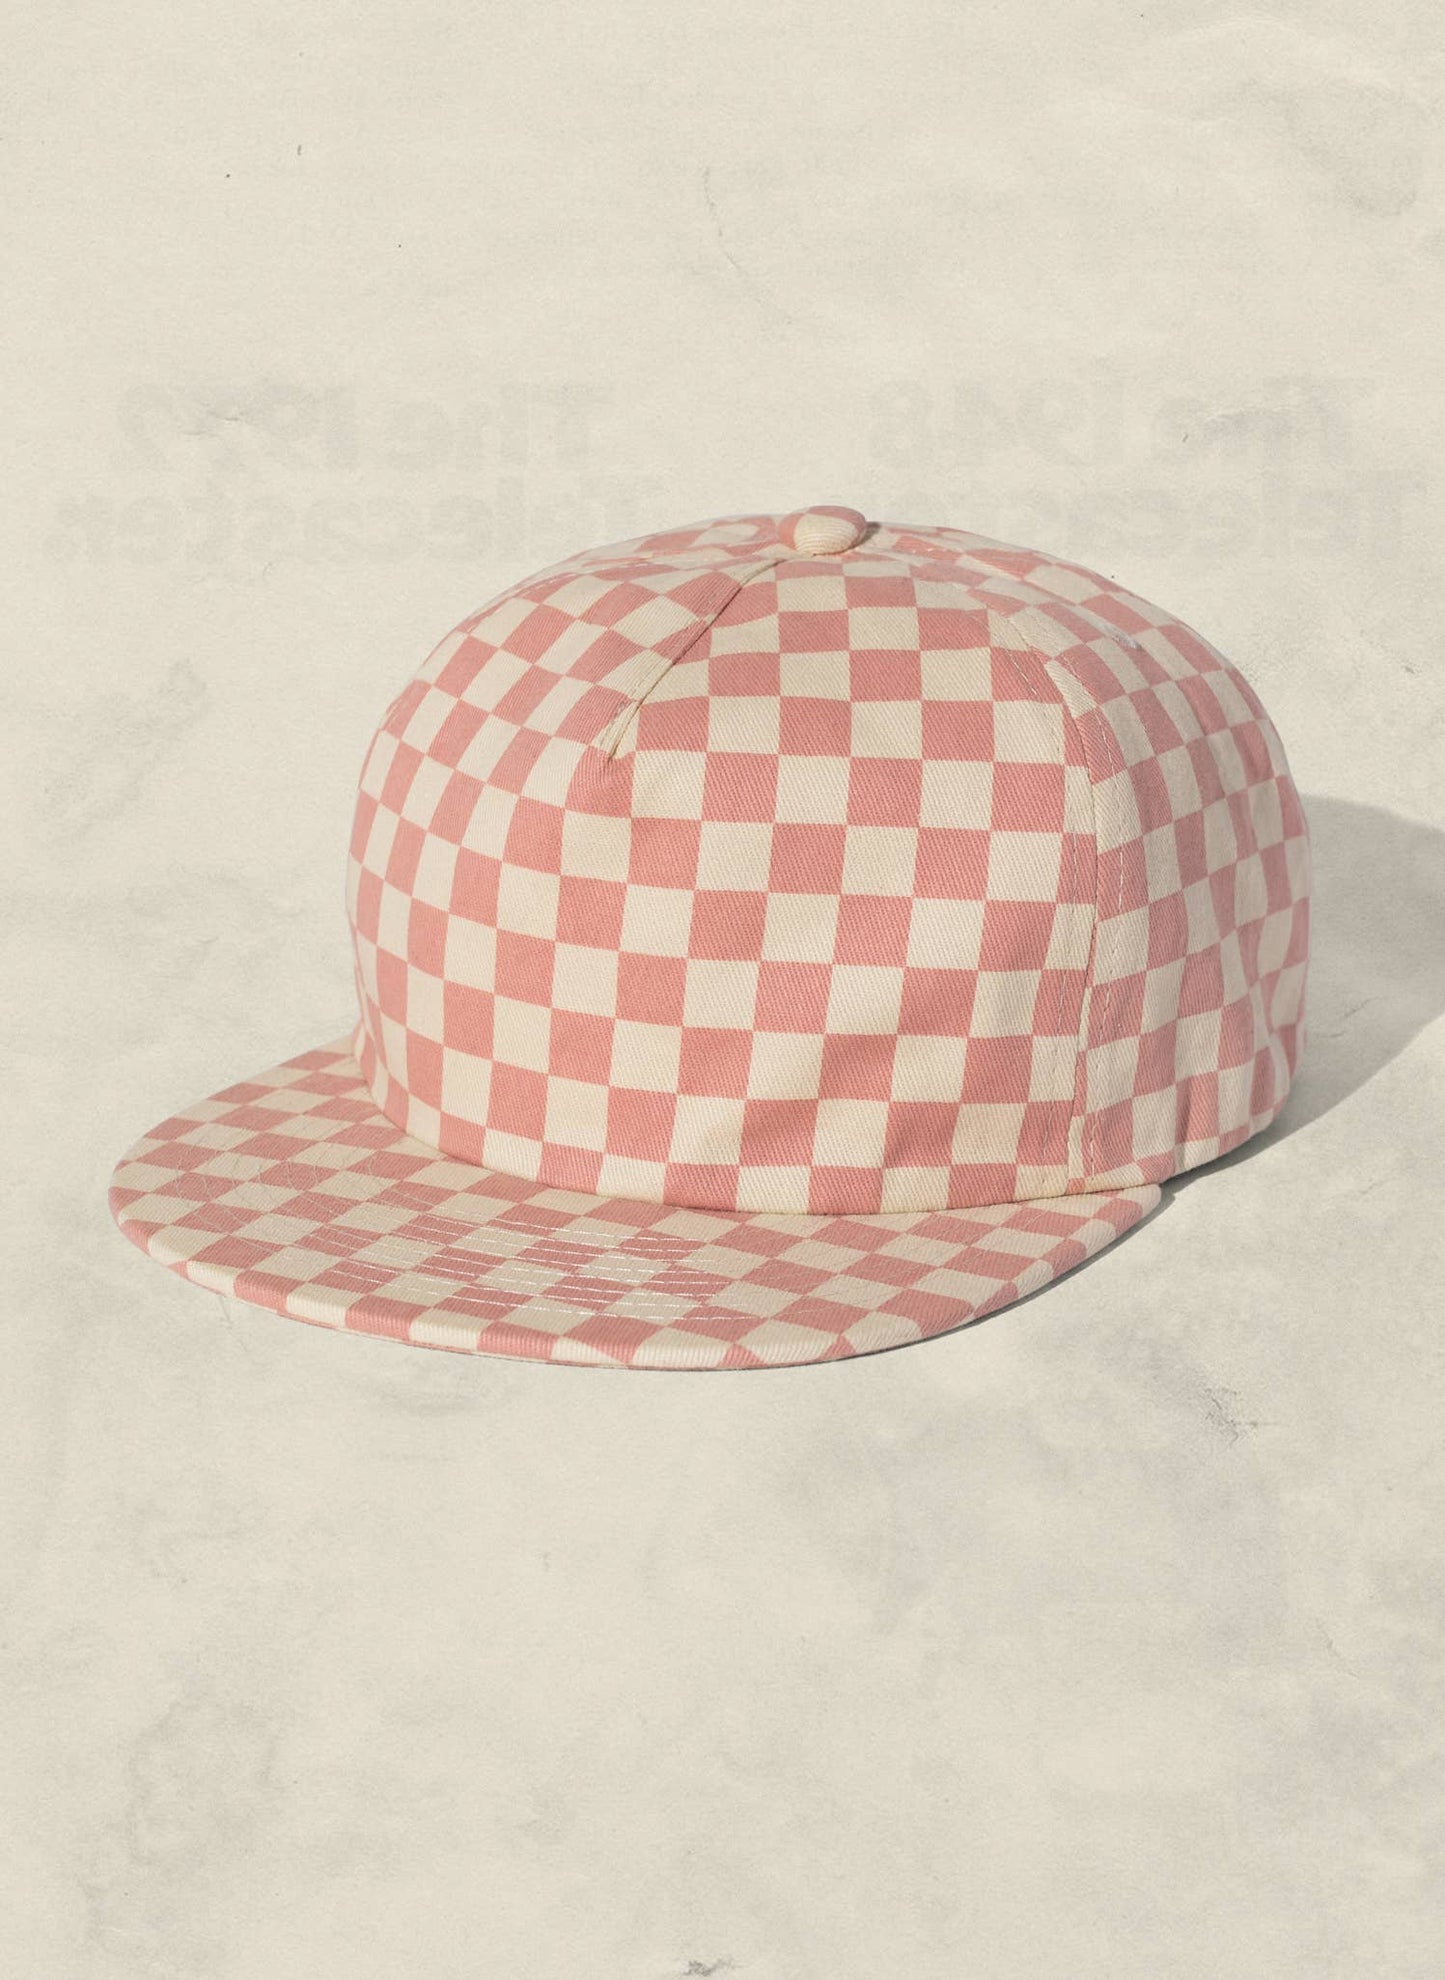 Checkerboard Field Trip Hat (+5 colors): Black